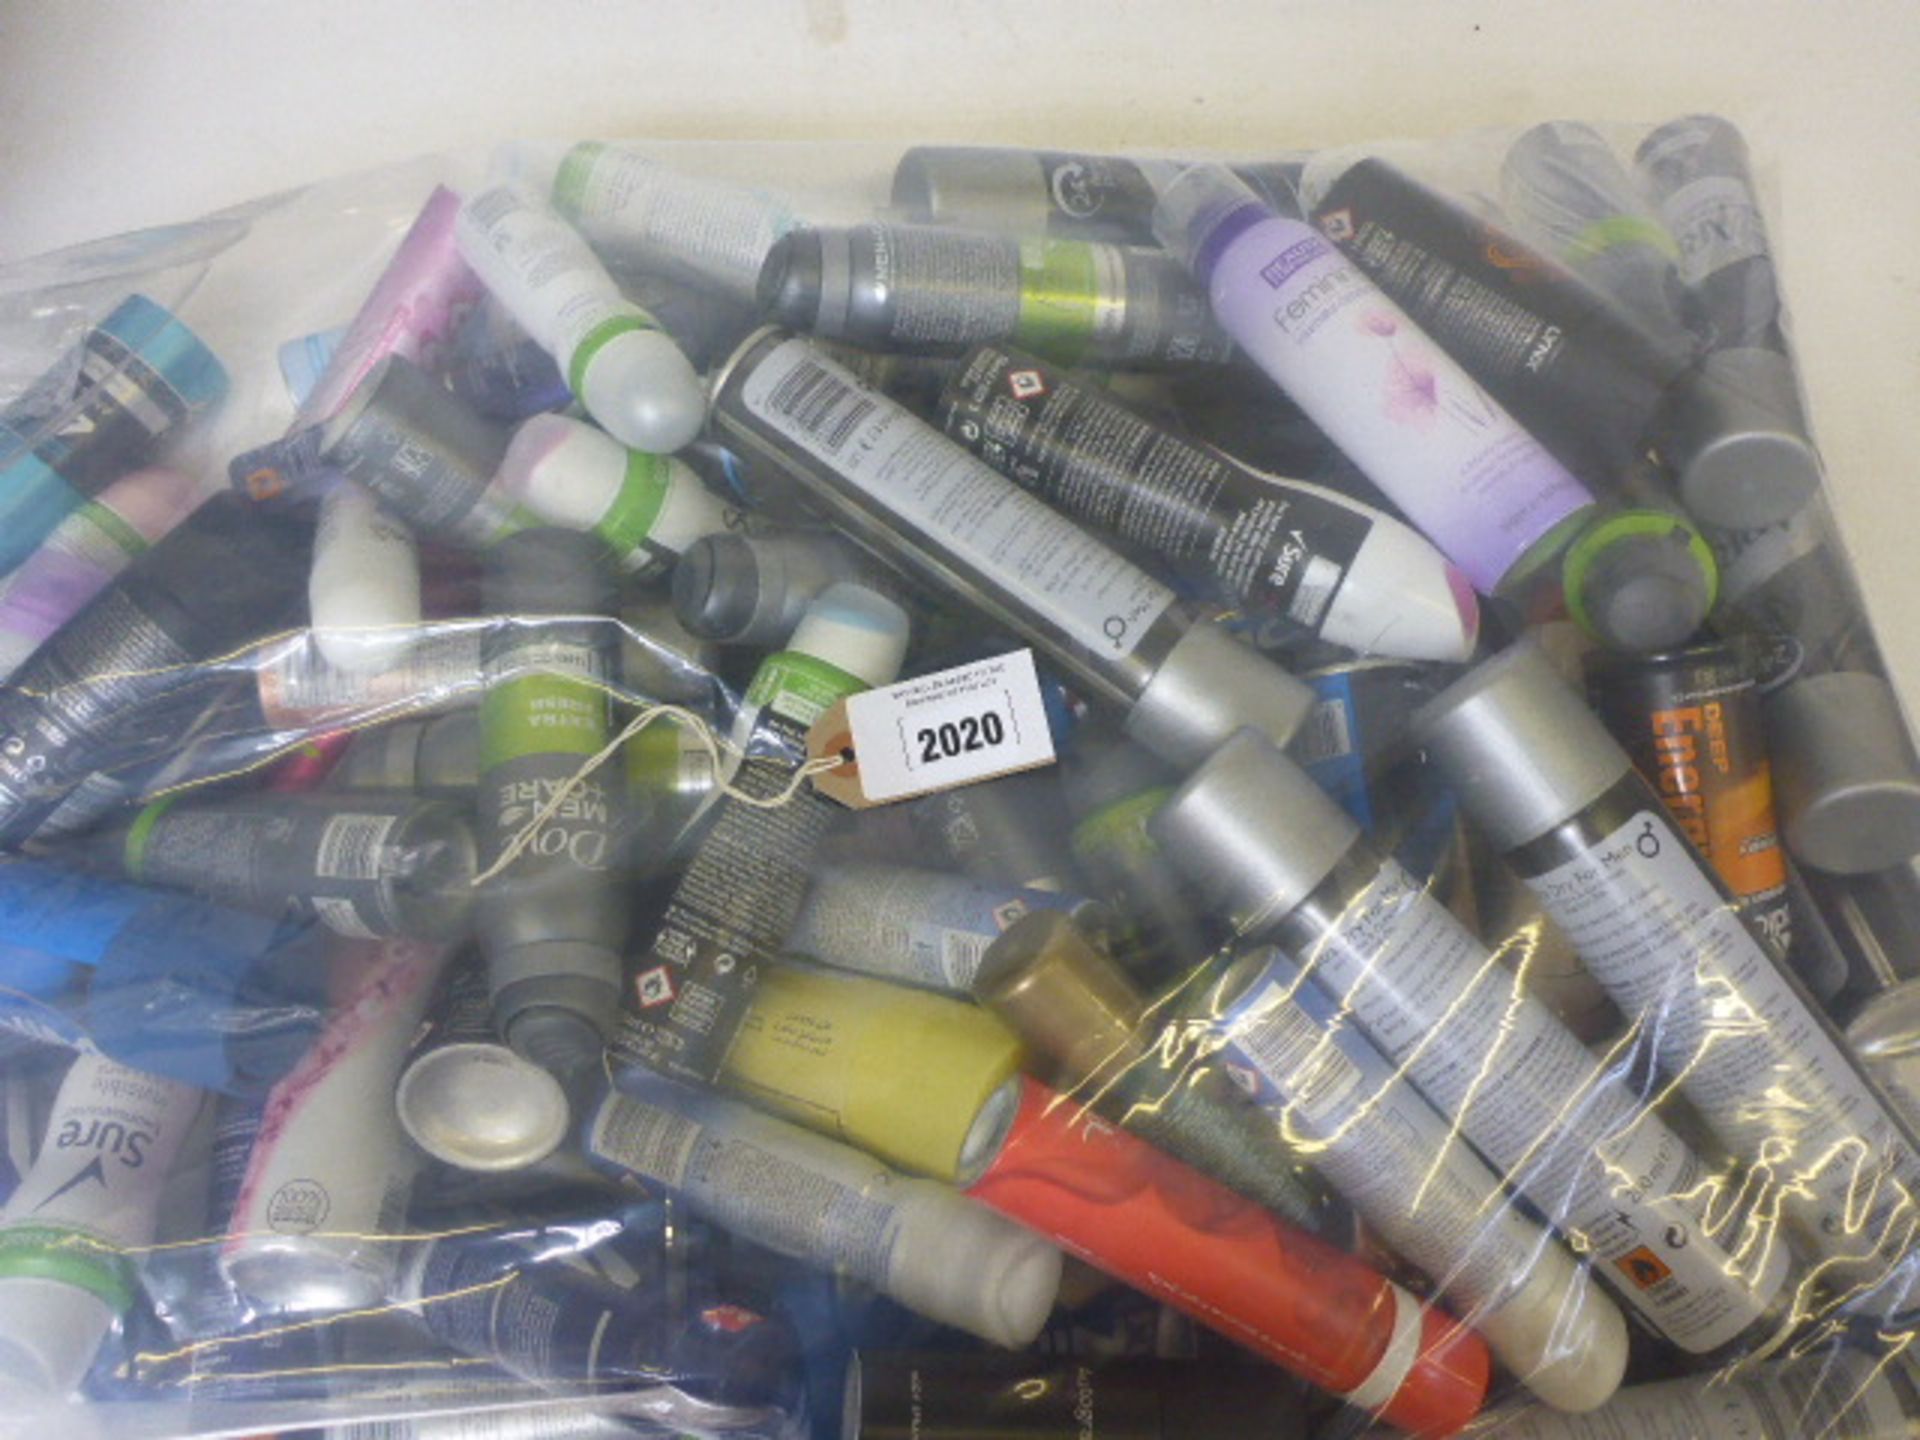 Quantity of aerosol deodorants, anti perspirants and body sprays